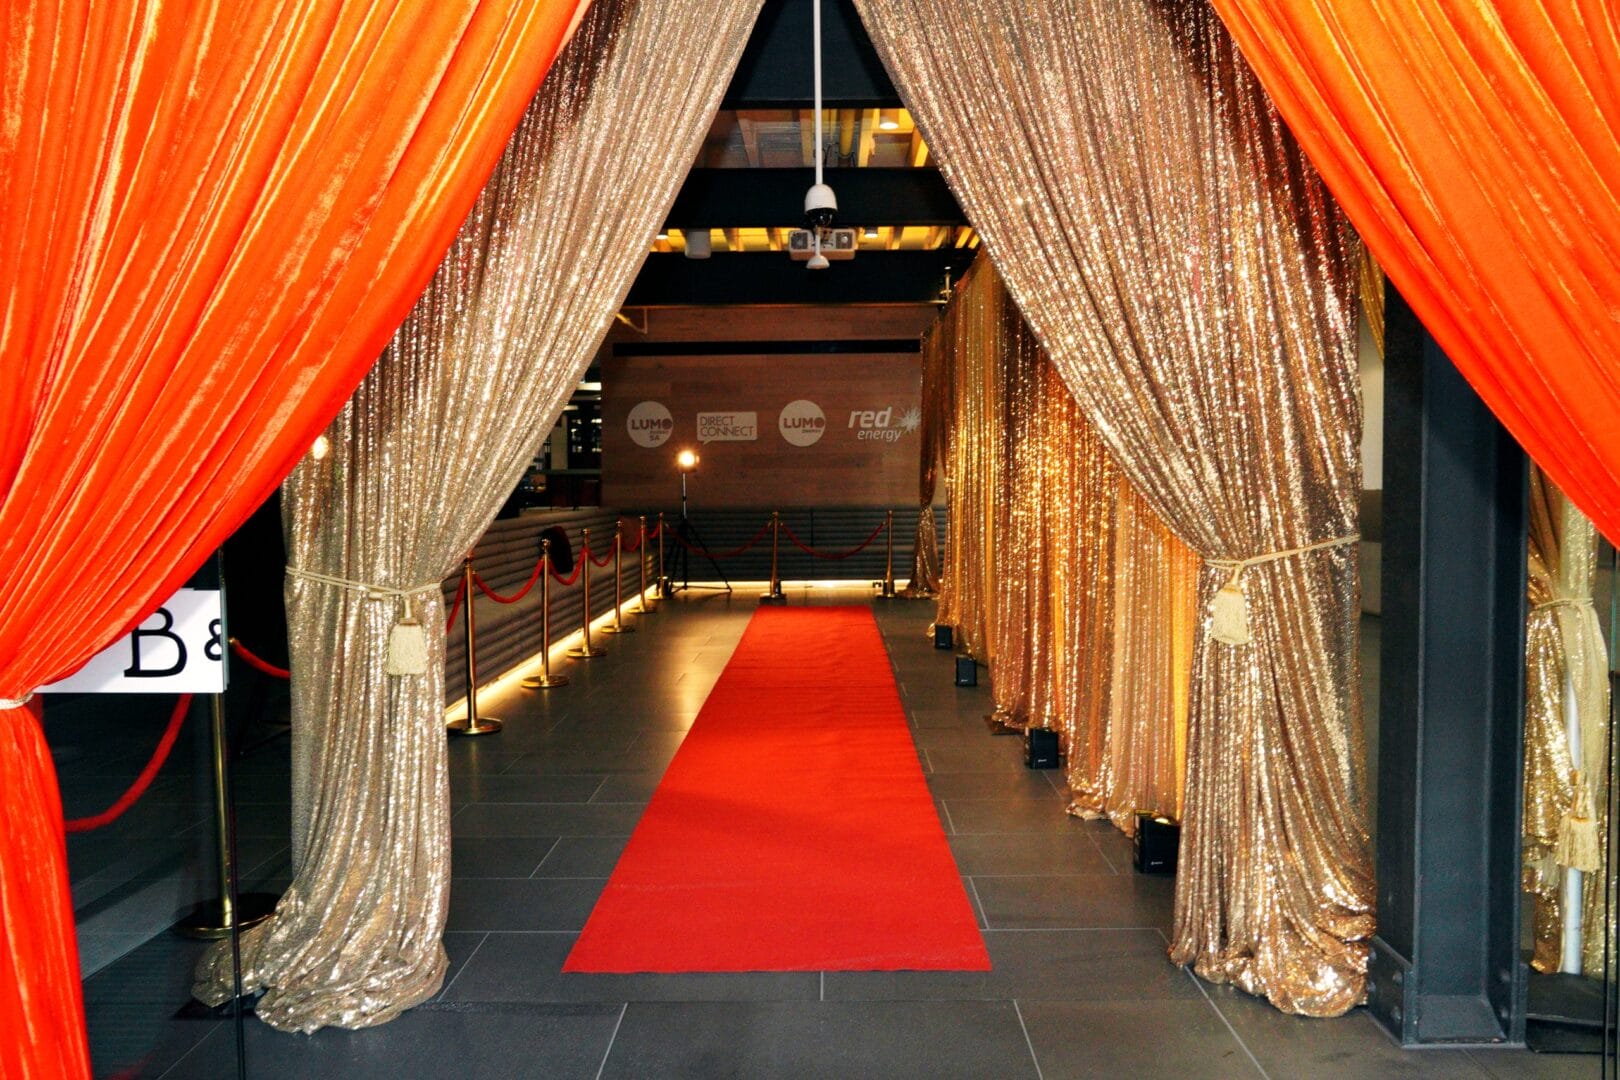 drape and red carpet entranceway